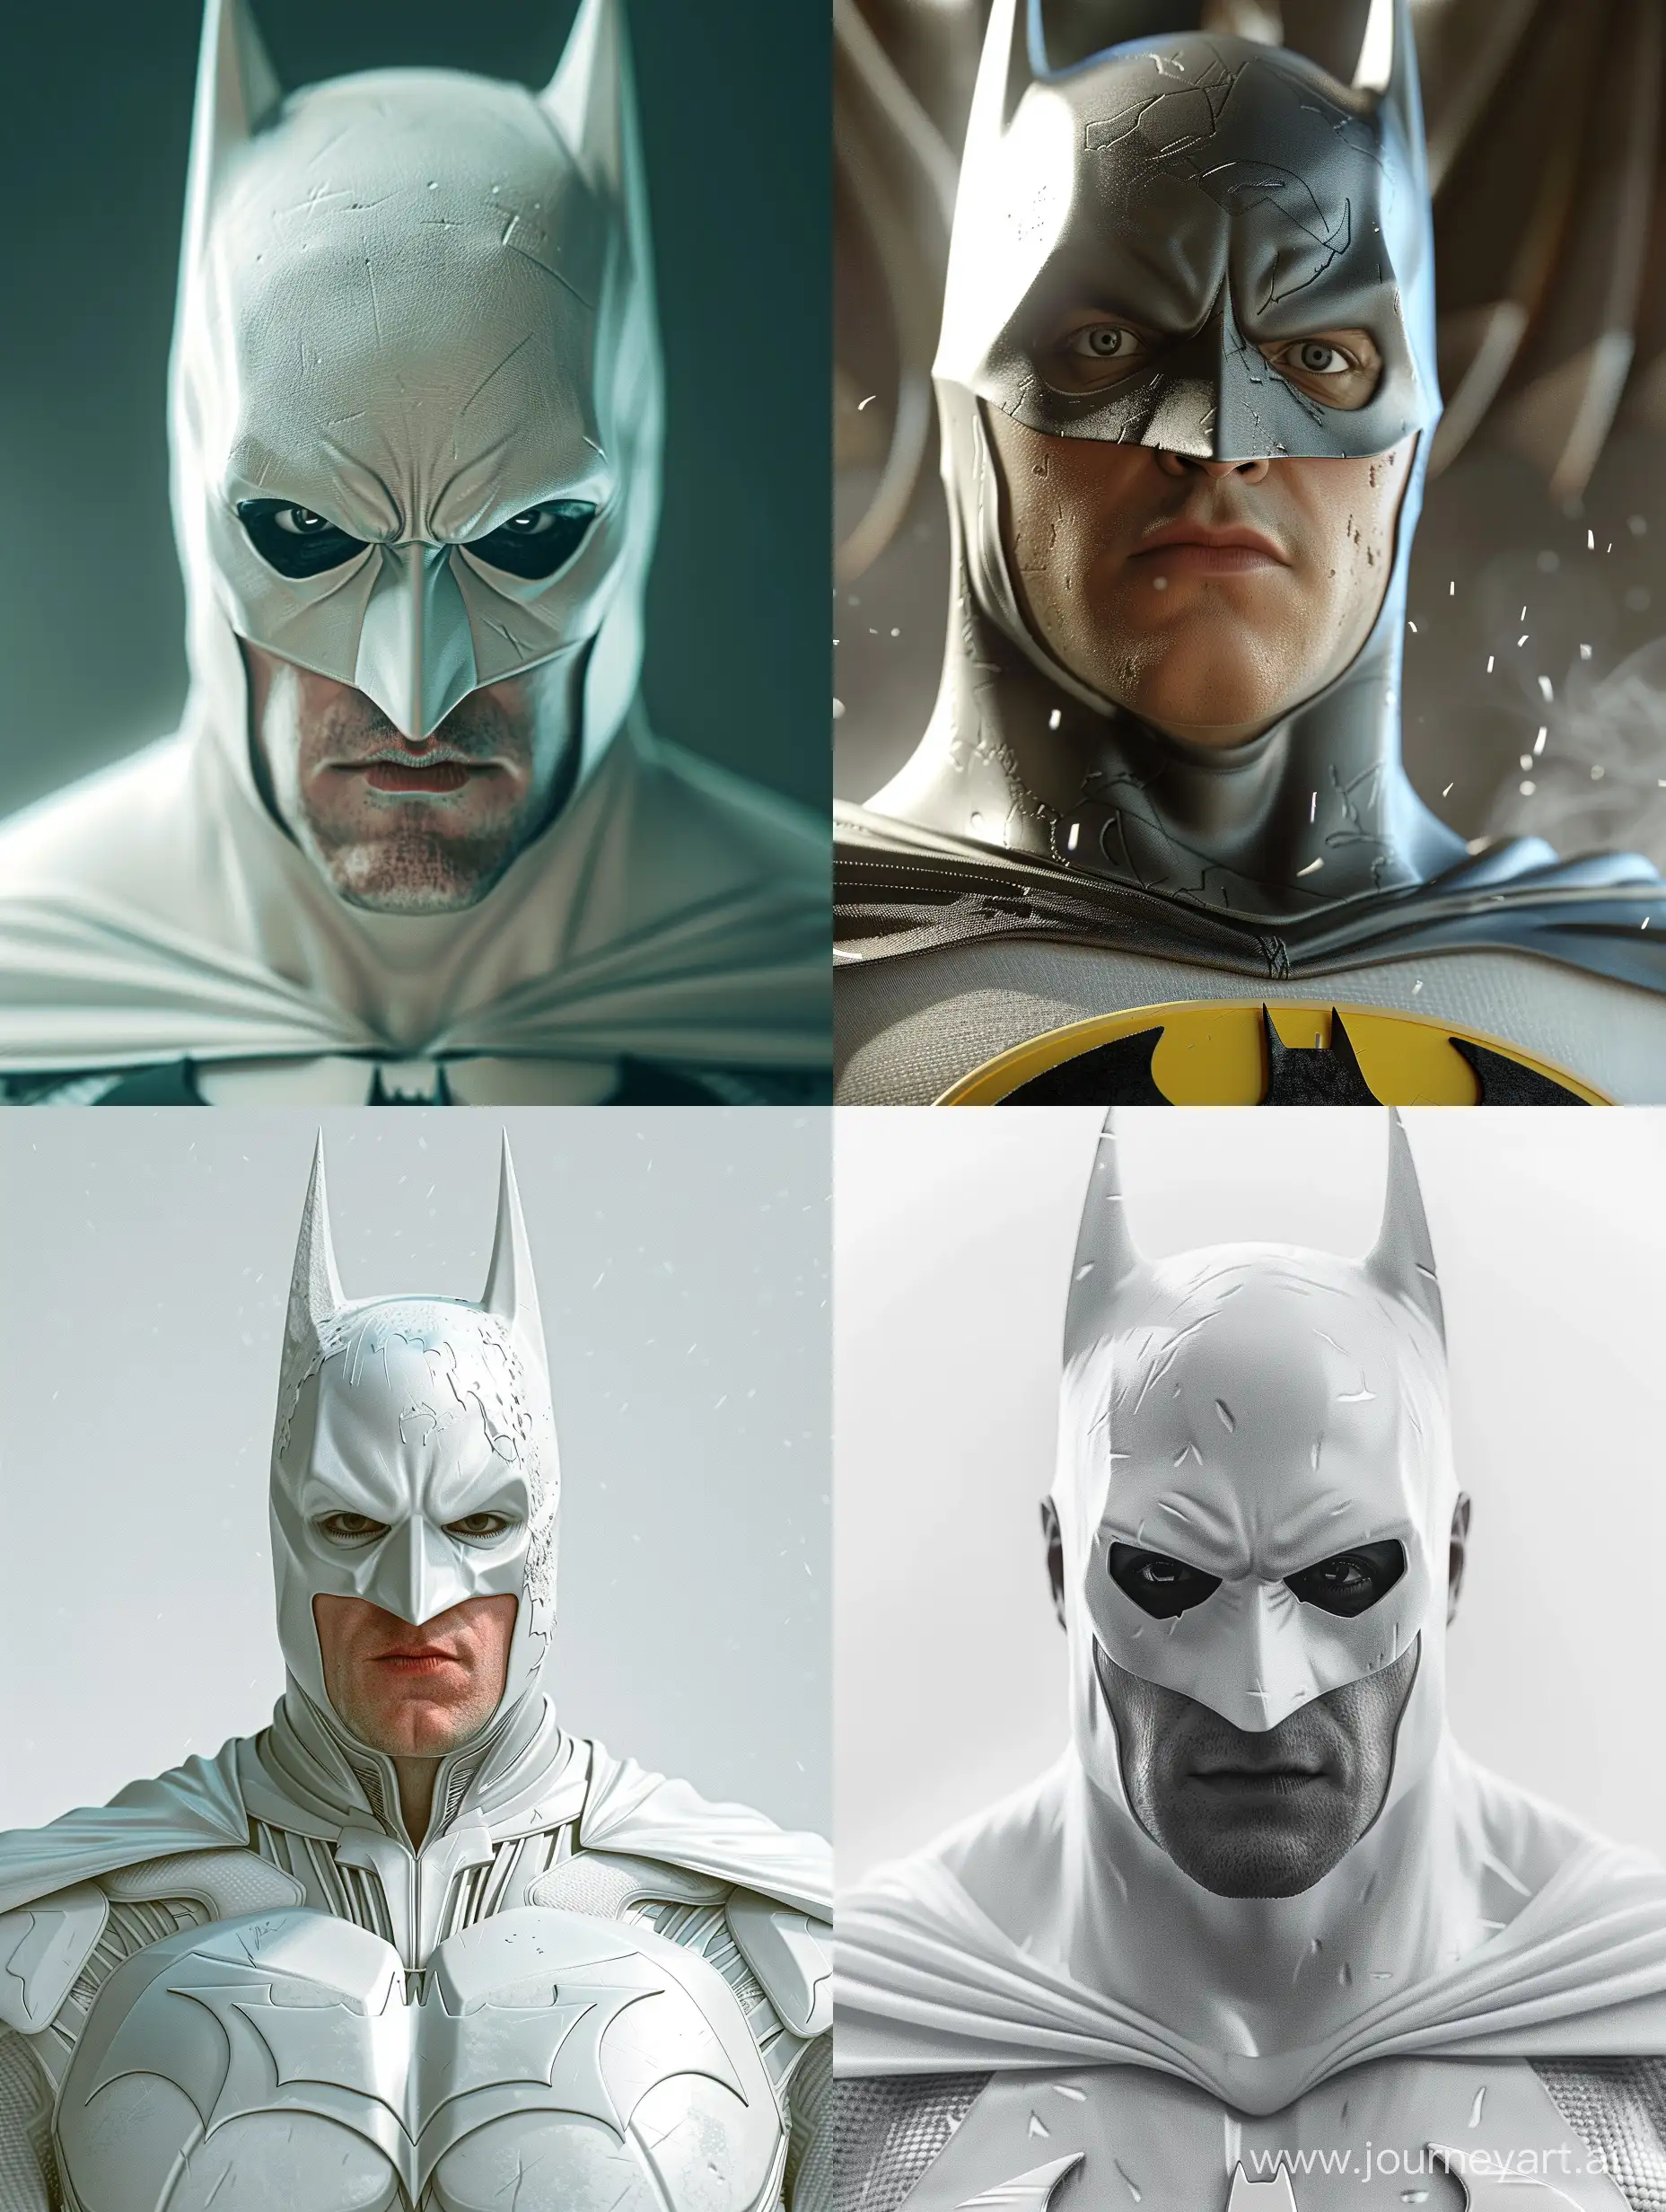 Christian-Bale-as-Batman-in-White-UltraRealistic-High-Resolution-Cinematic-Lighting-Art